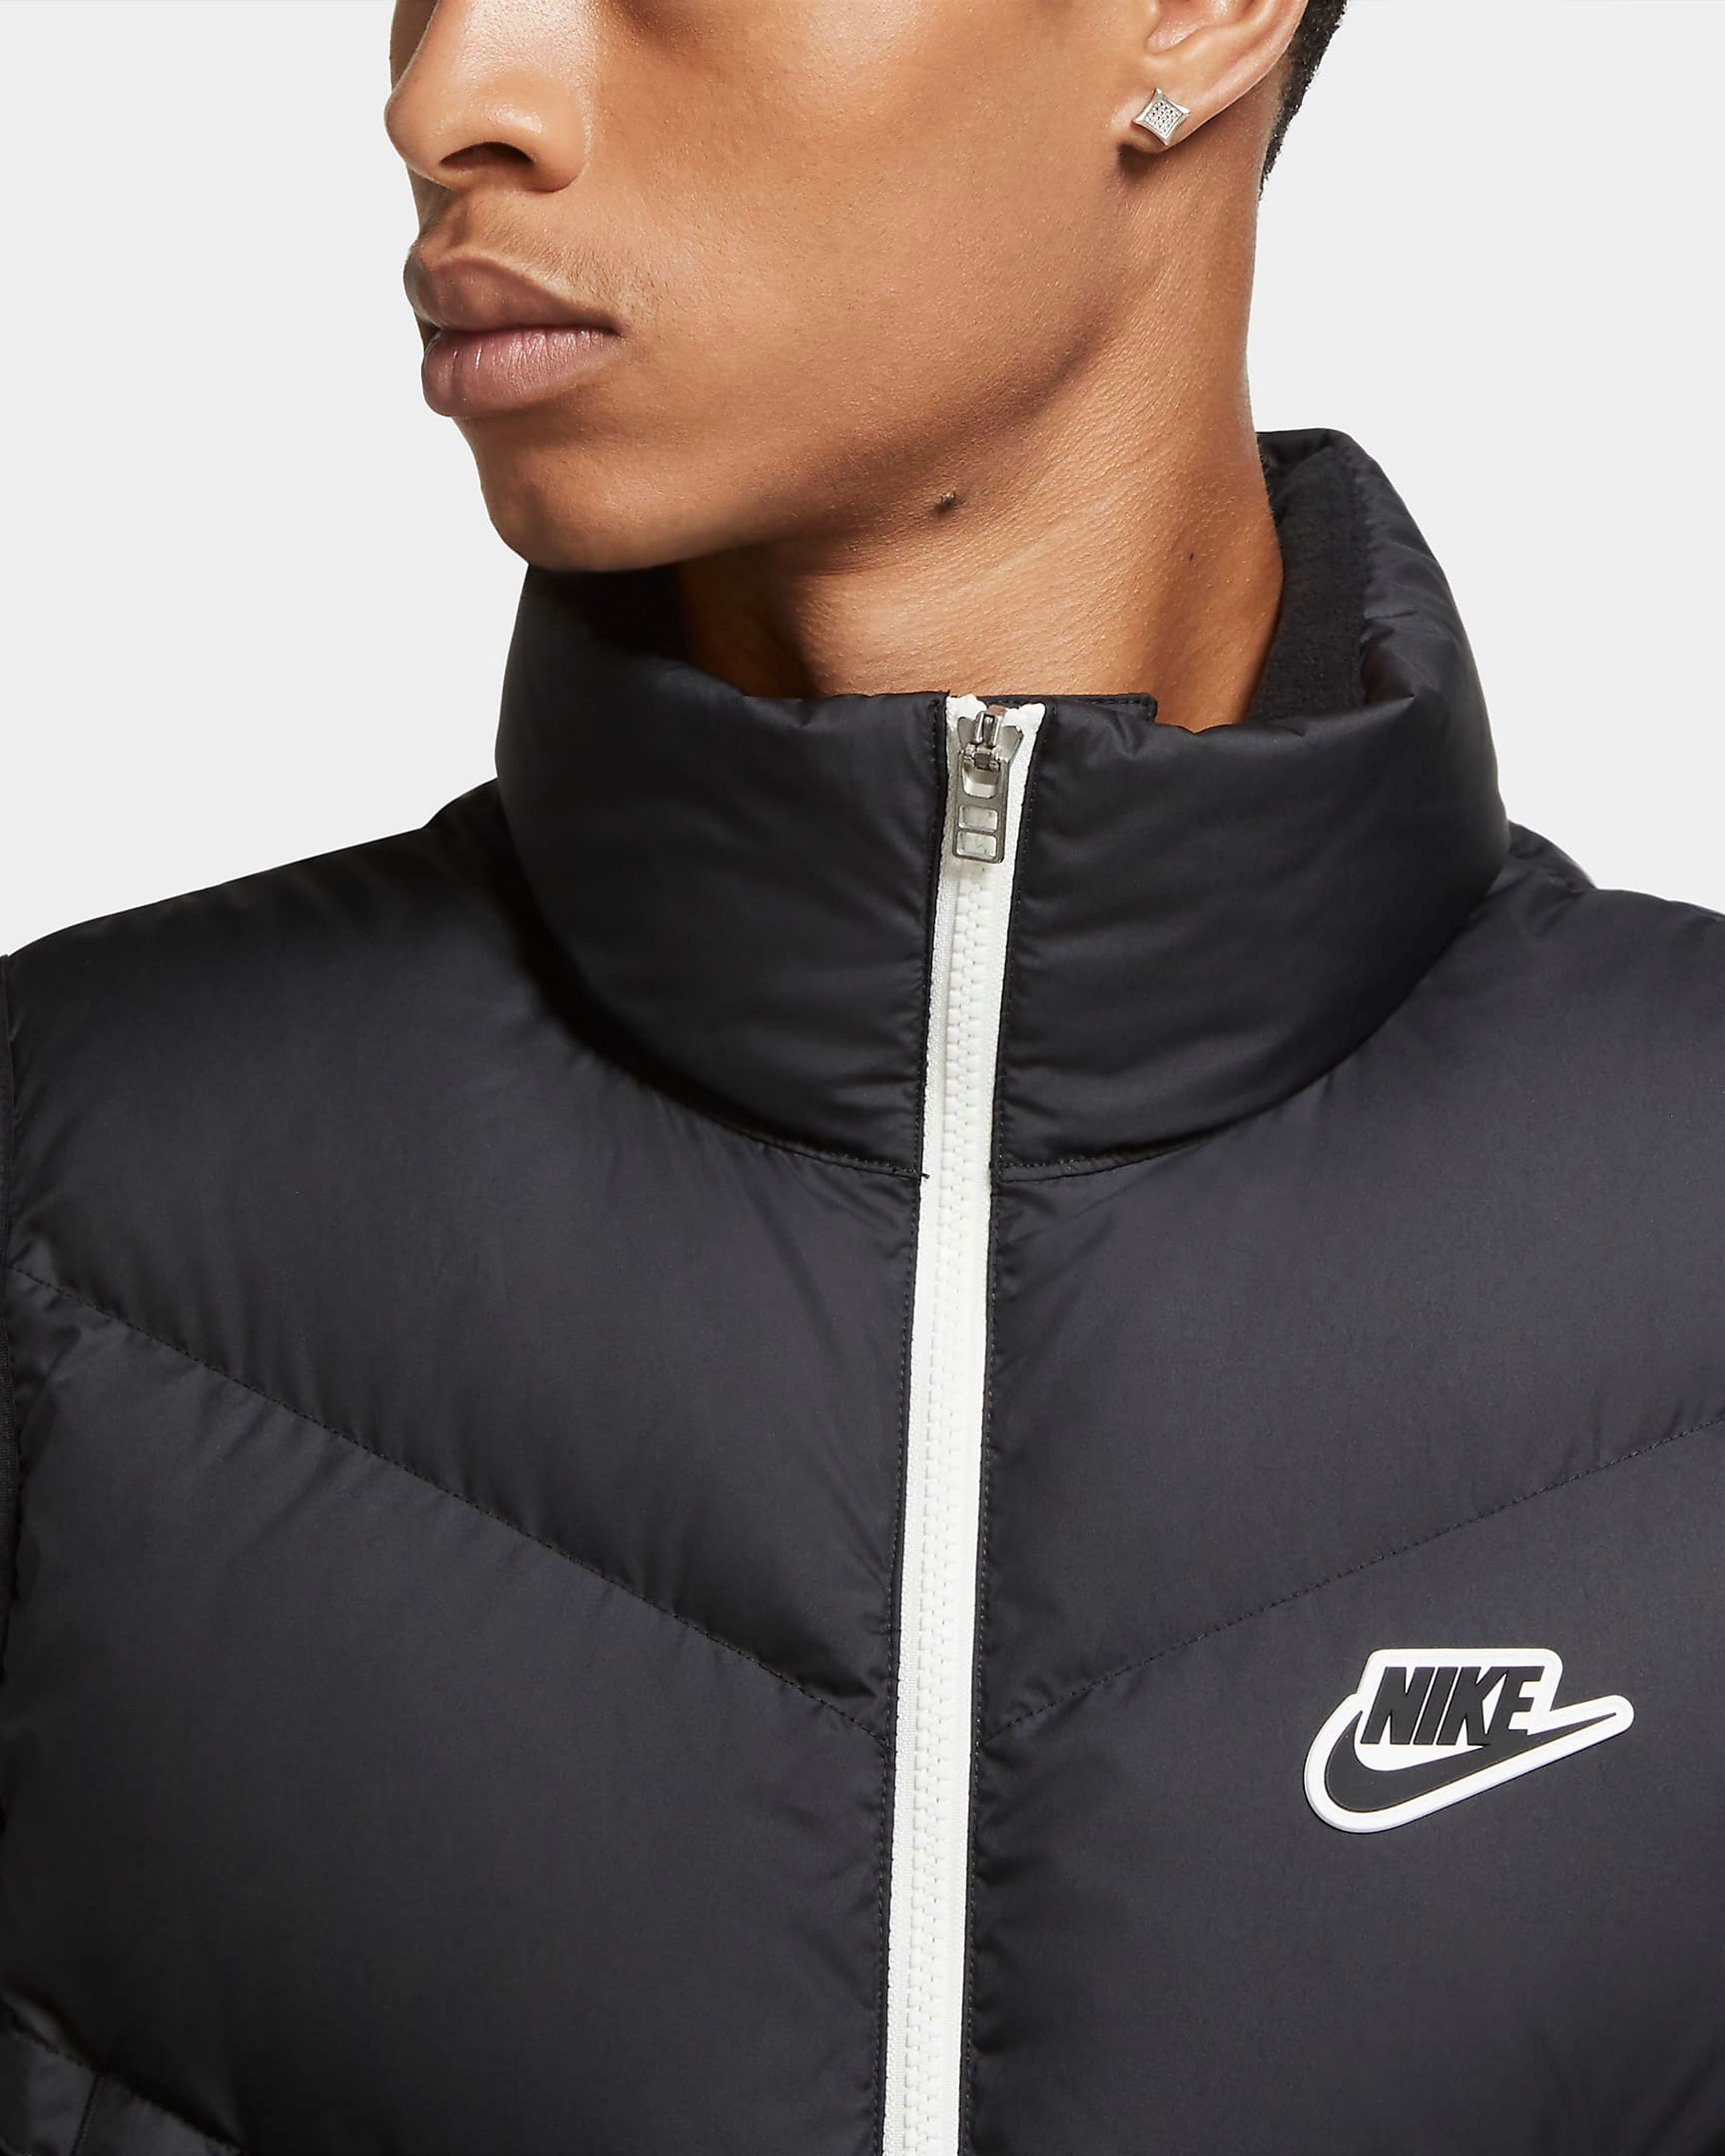 Jordan 1 Dark Mocha Nike Vest Jacket Outfit | SneakerFits.com